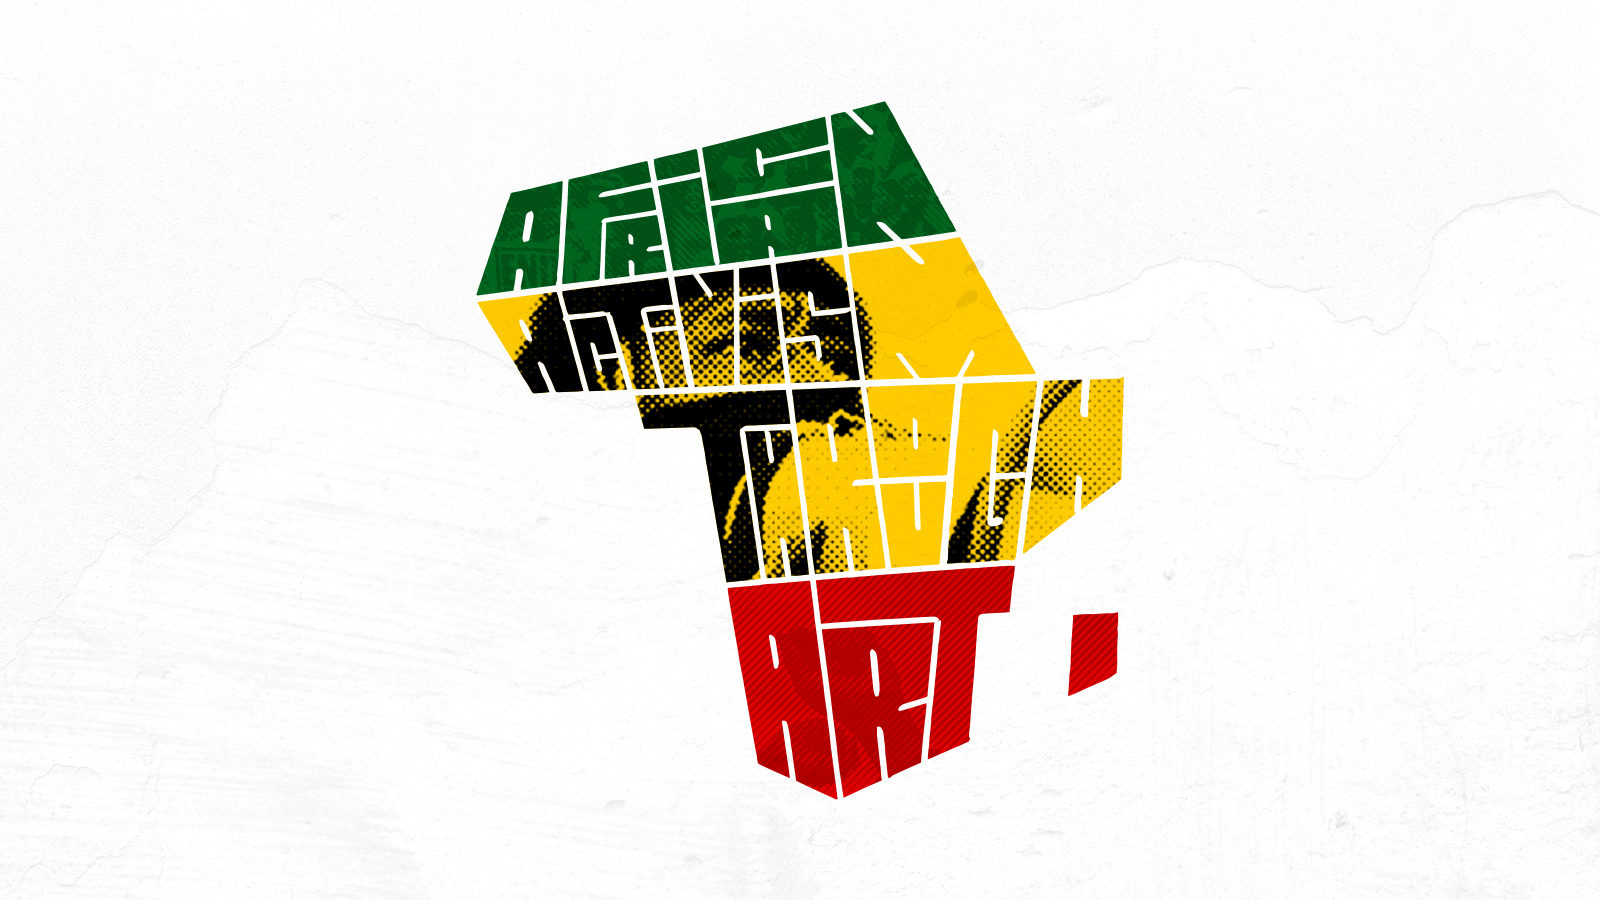 AfricanActivismThroughArt